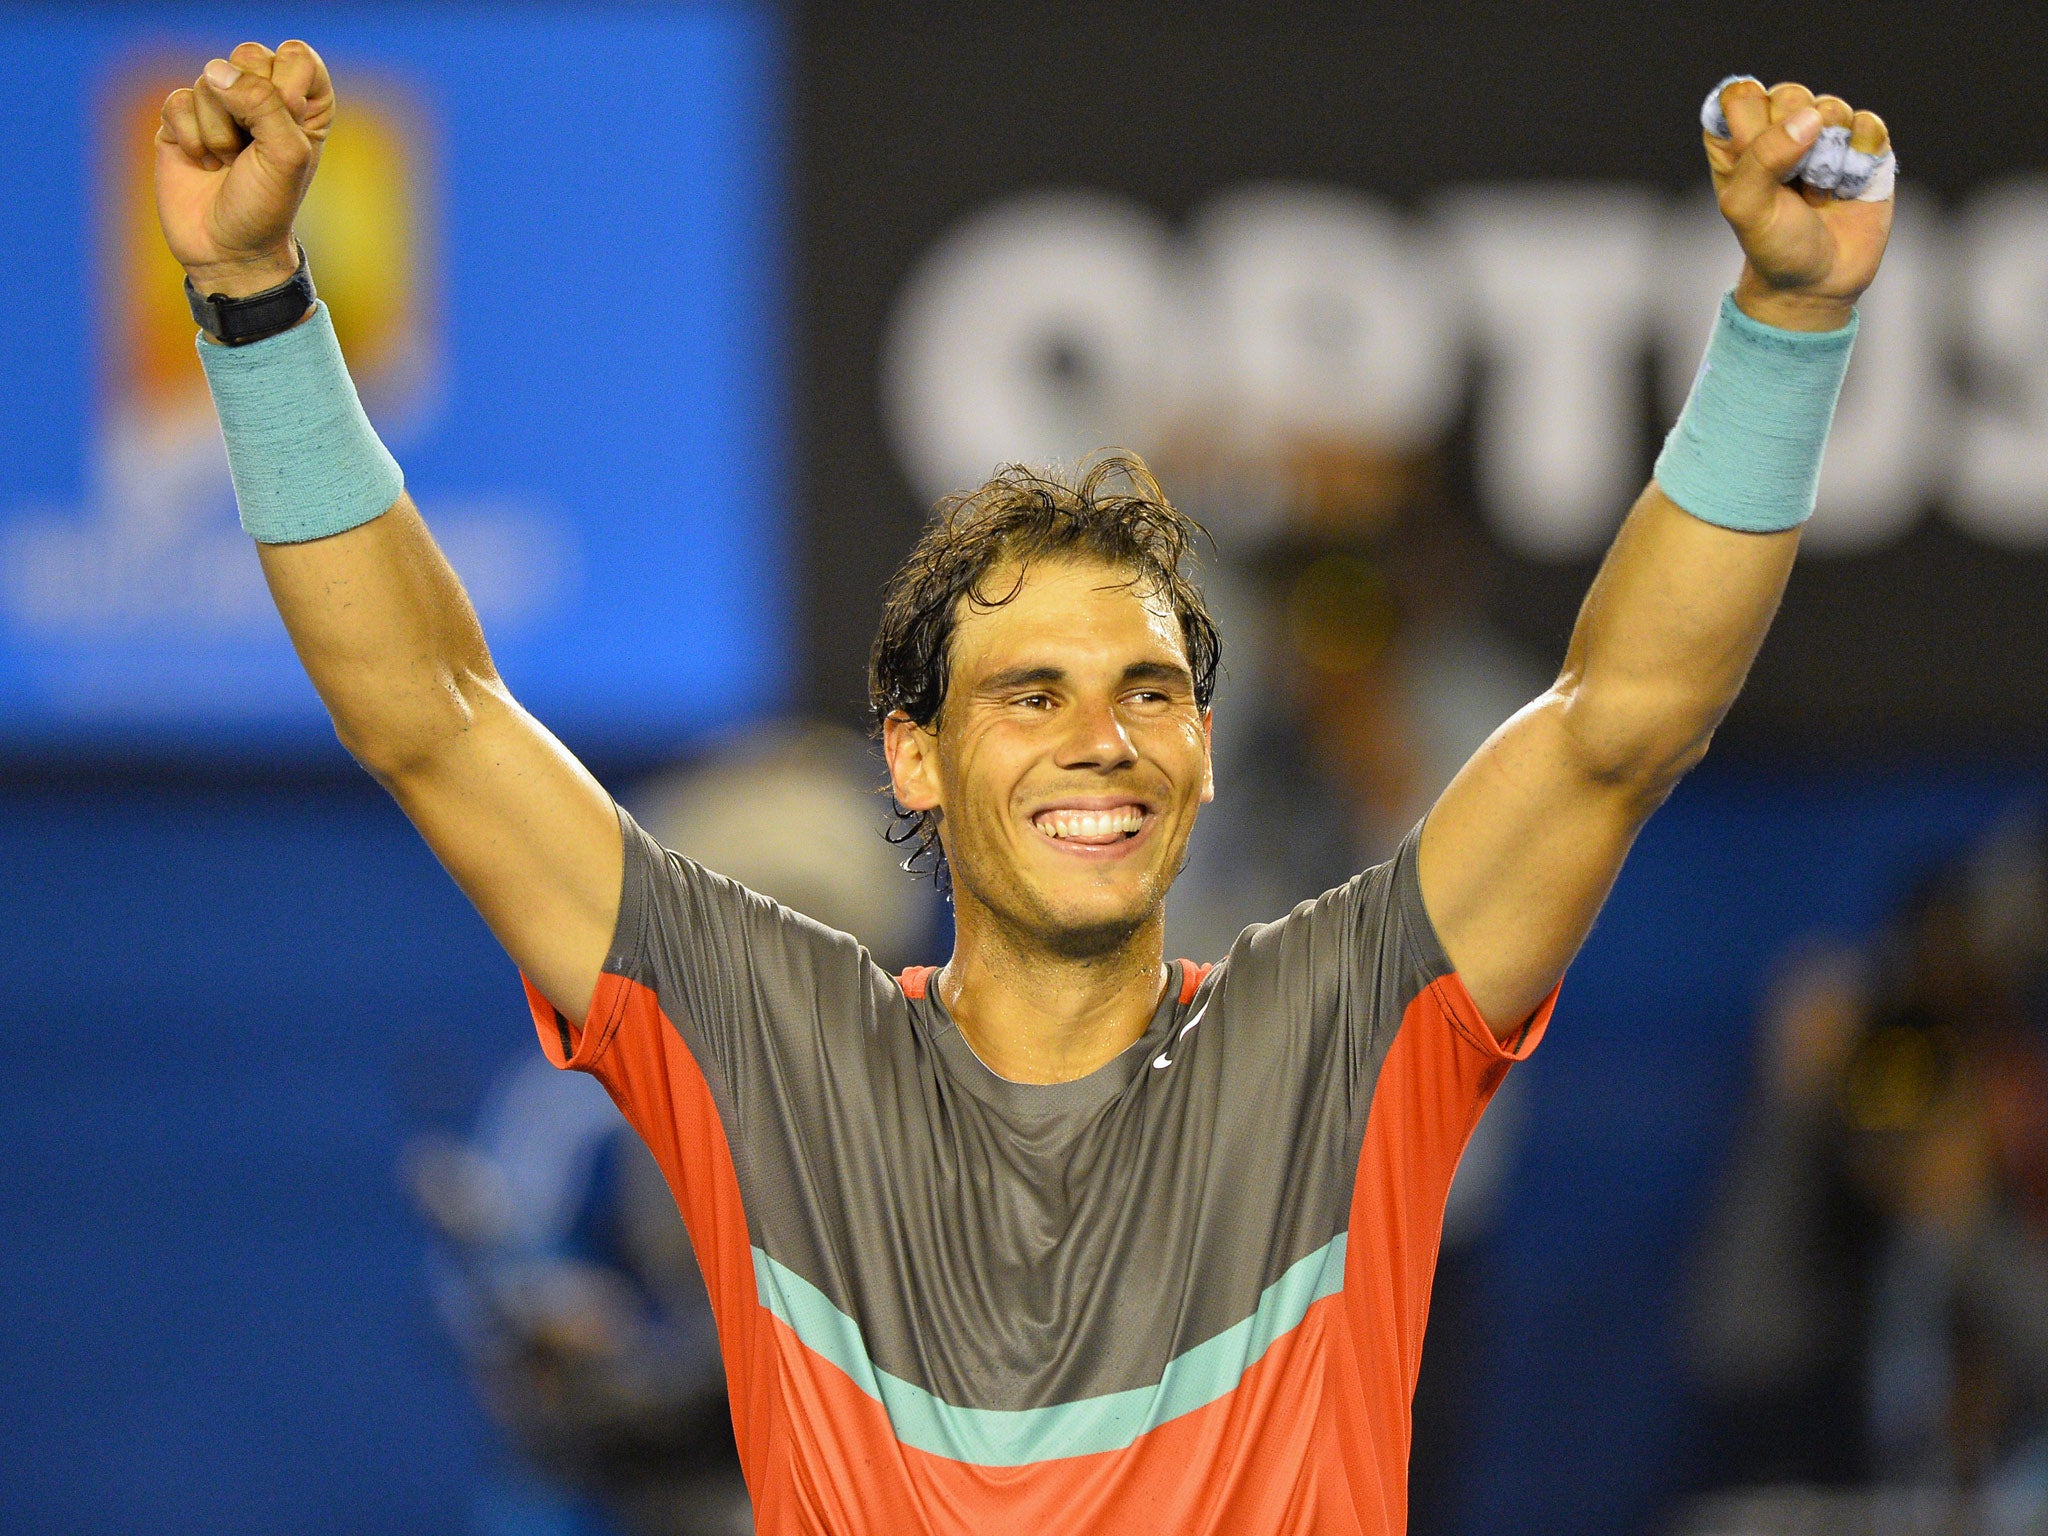 Rafael Nadal celebrates his victory over Federer